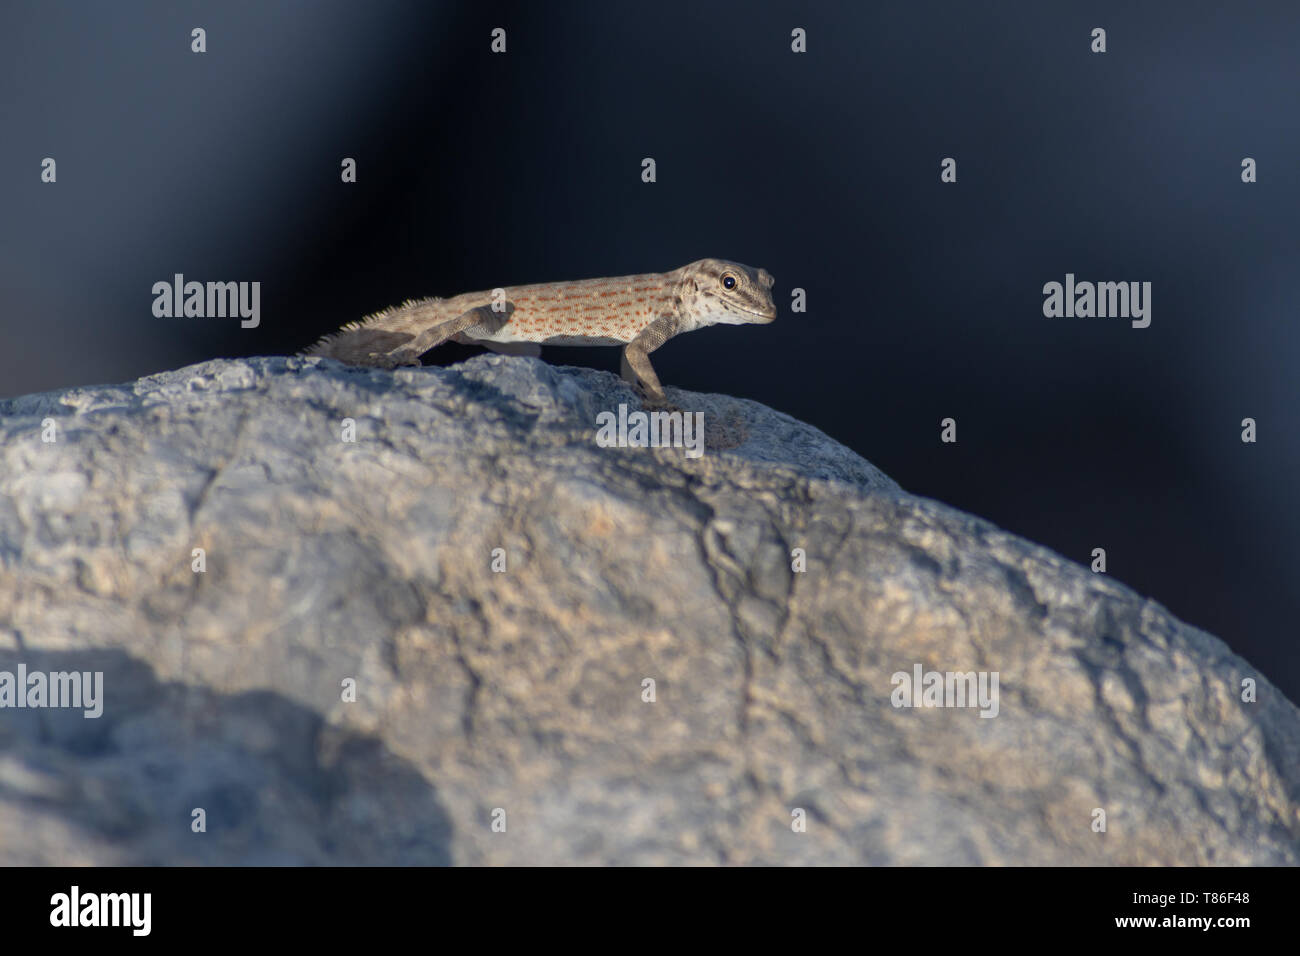 A Rock Semaphore Gecko (Pristurus rupestris) on a rock in the evening sun in Ras al Khaimah, United Arab Emirates. Stock Photo